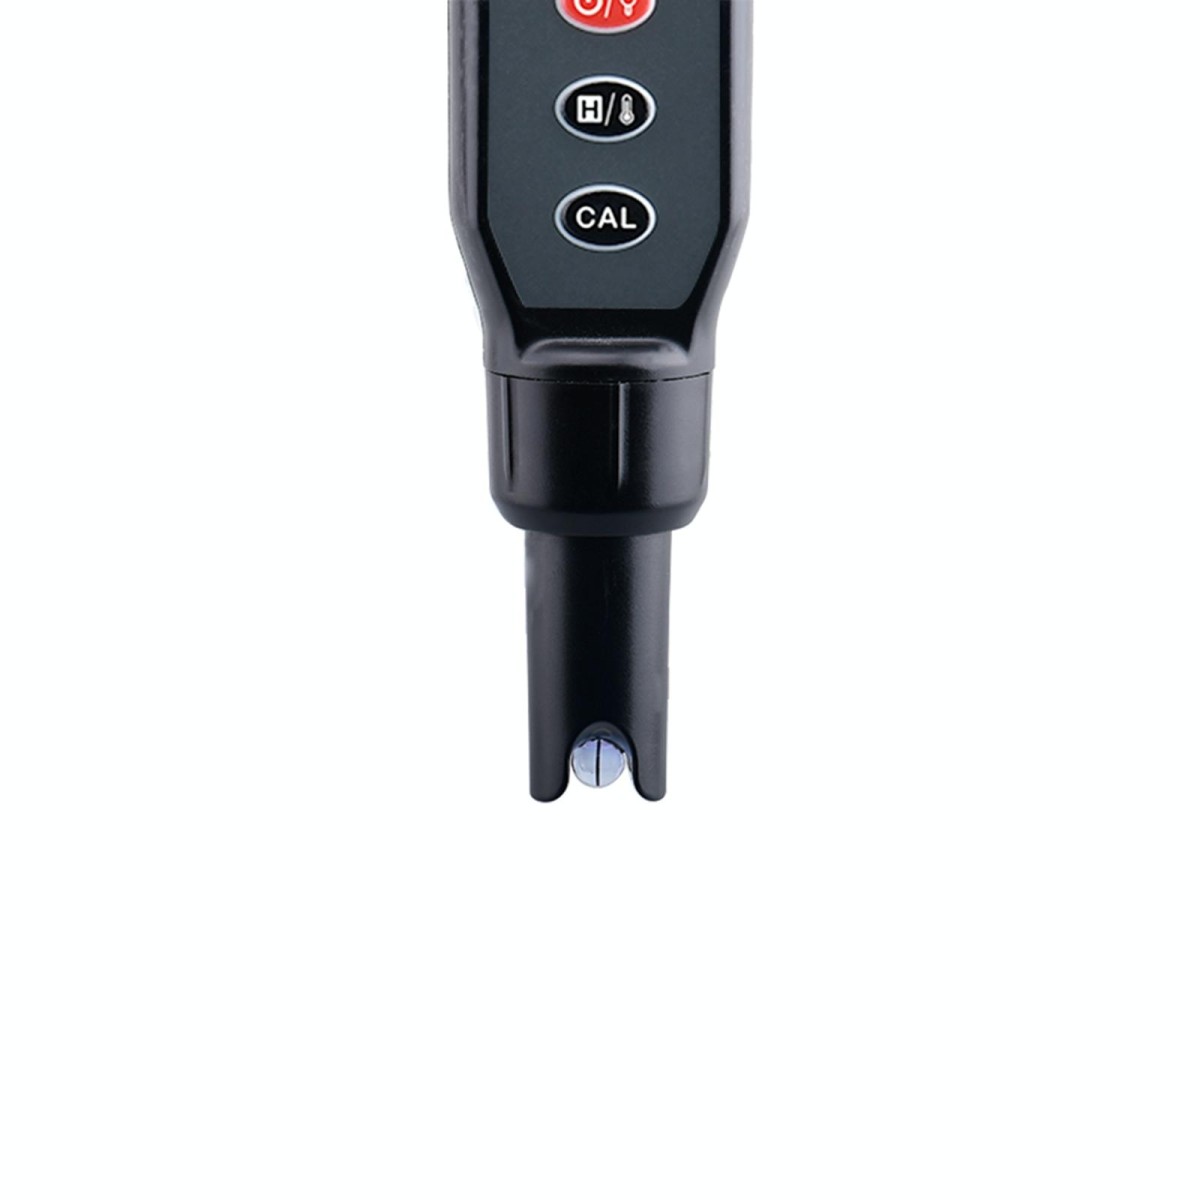 BENETECH GM761 Digital PH Meter Tester